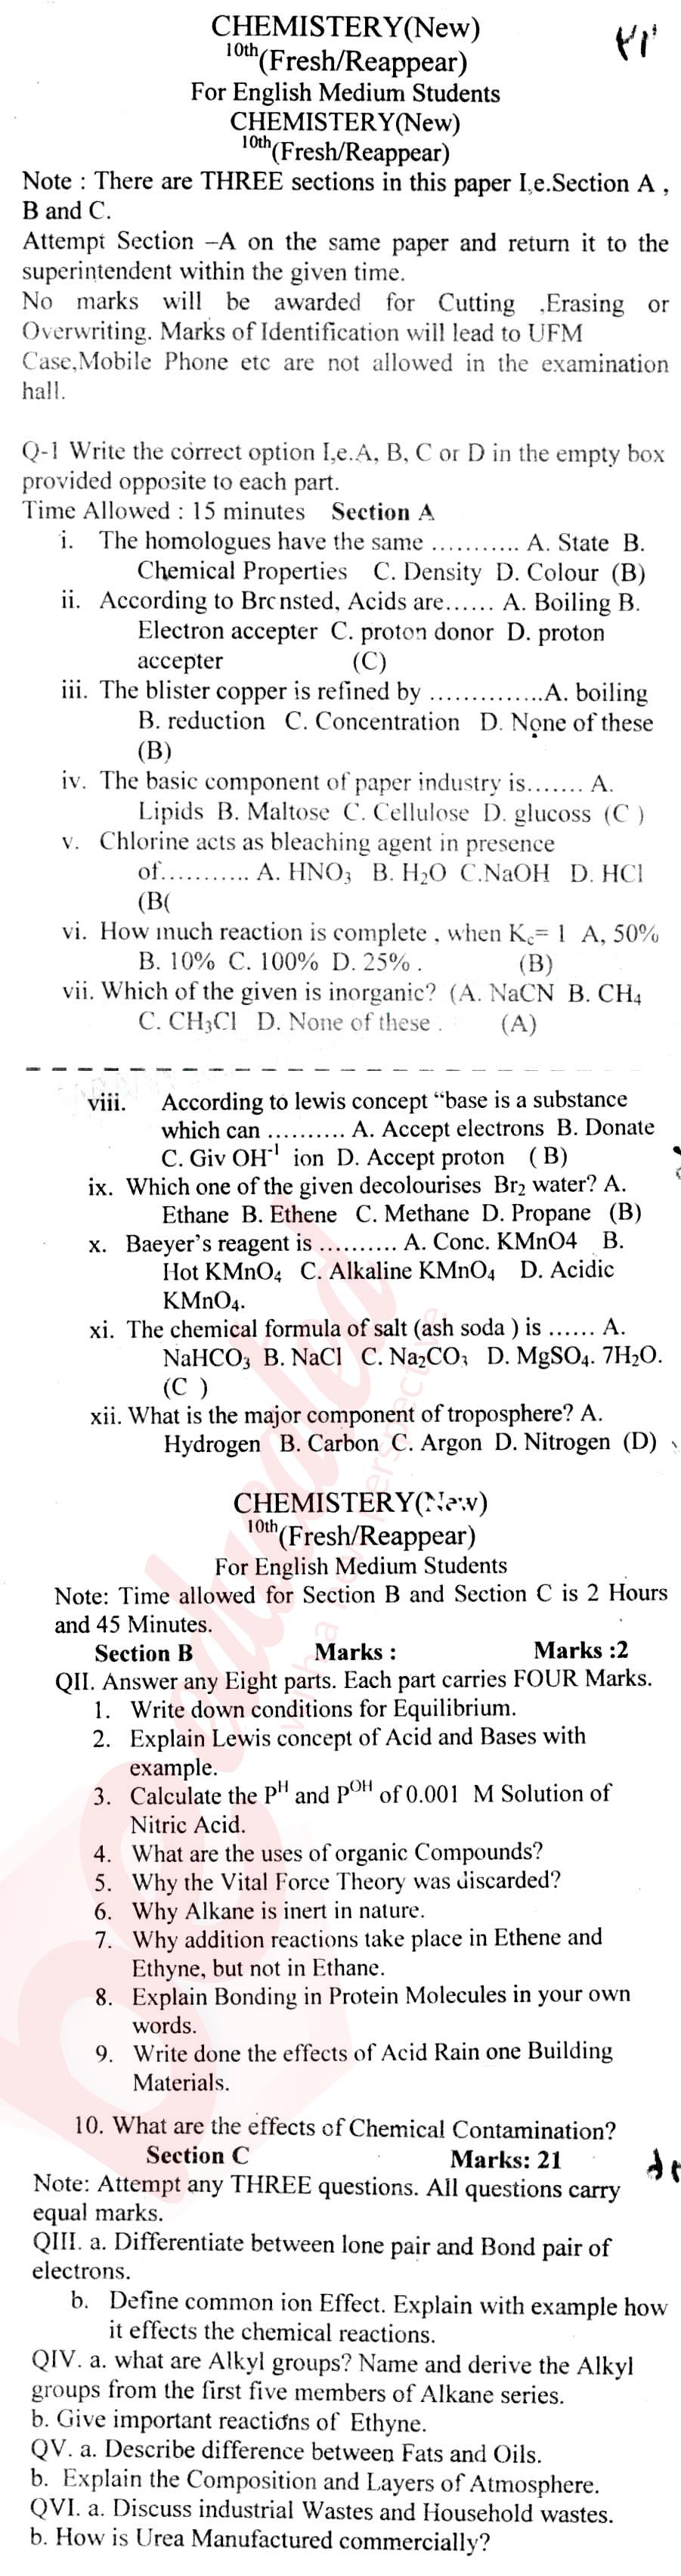 Chemistry 10th English Medium Past Paper Group 1 BISE Mardan 2016